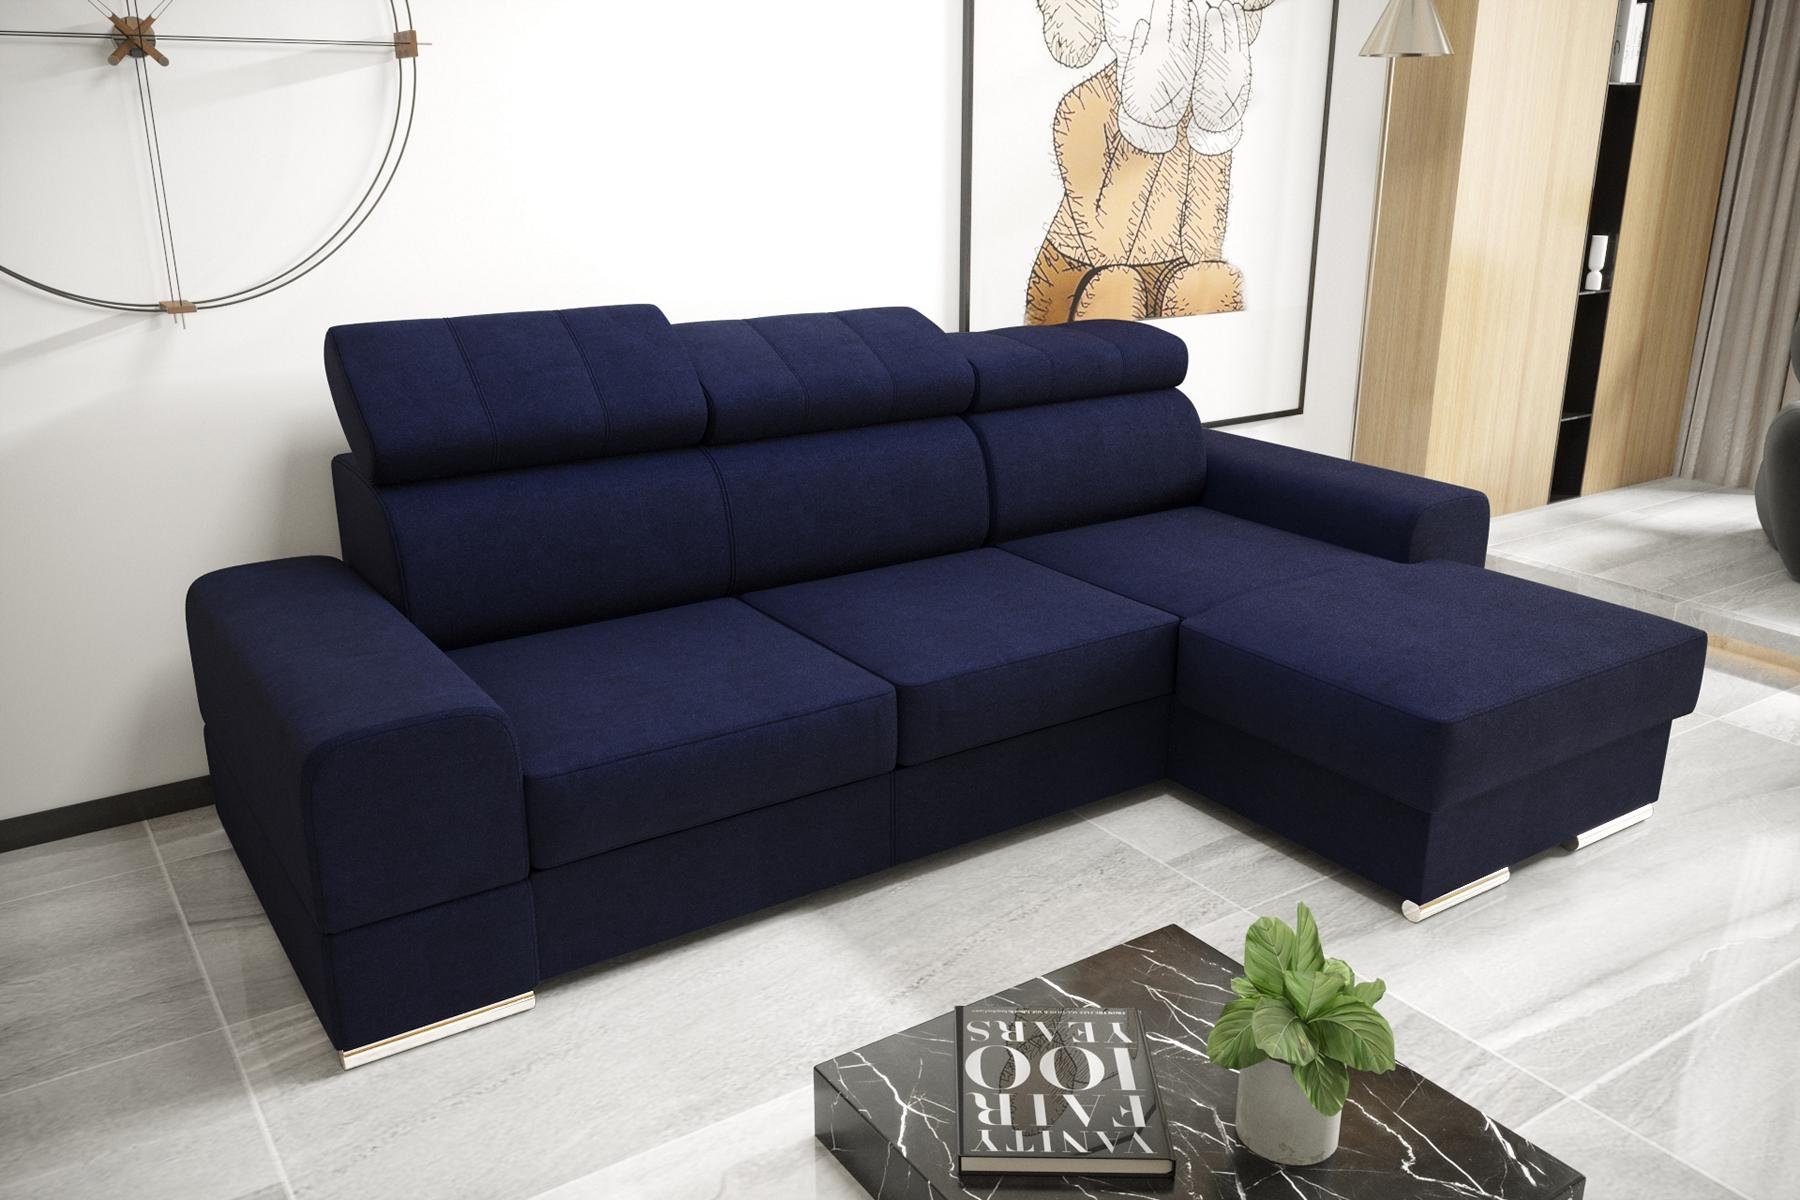 JVmoebel Ecksofa Wohnlandschaft Bettfunktion Stoff Ecksofa L-Form Sofa Couch, Made in Europe Blau